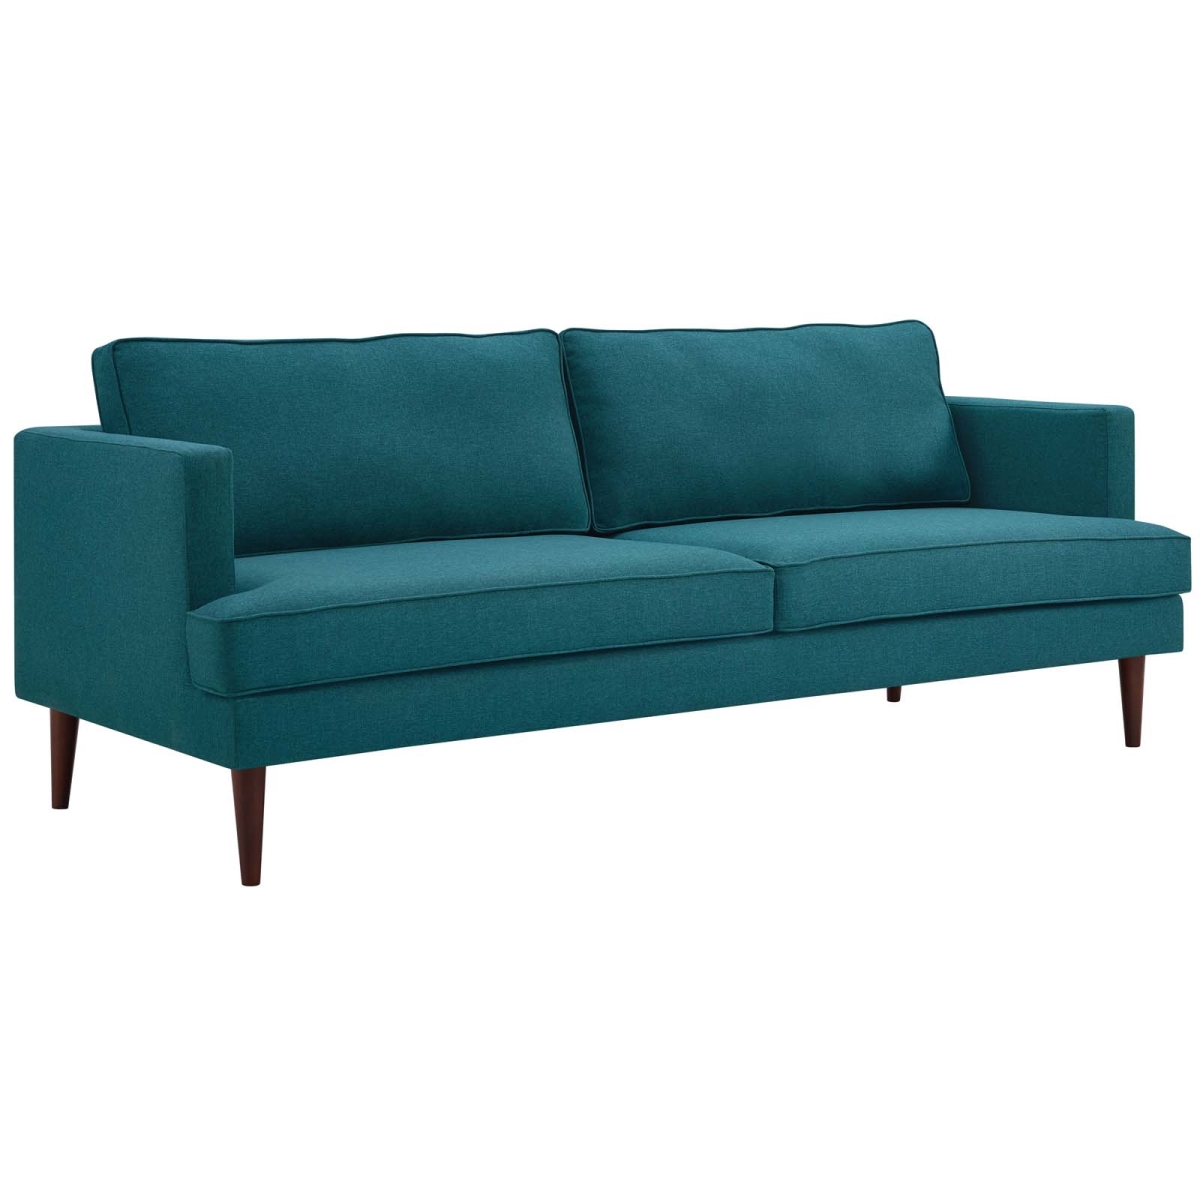 Eei-3057-tea Agile Upholstered Fabric Sofa - Teal, 34.5 X 35 X 86.5 In.